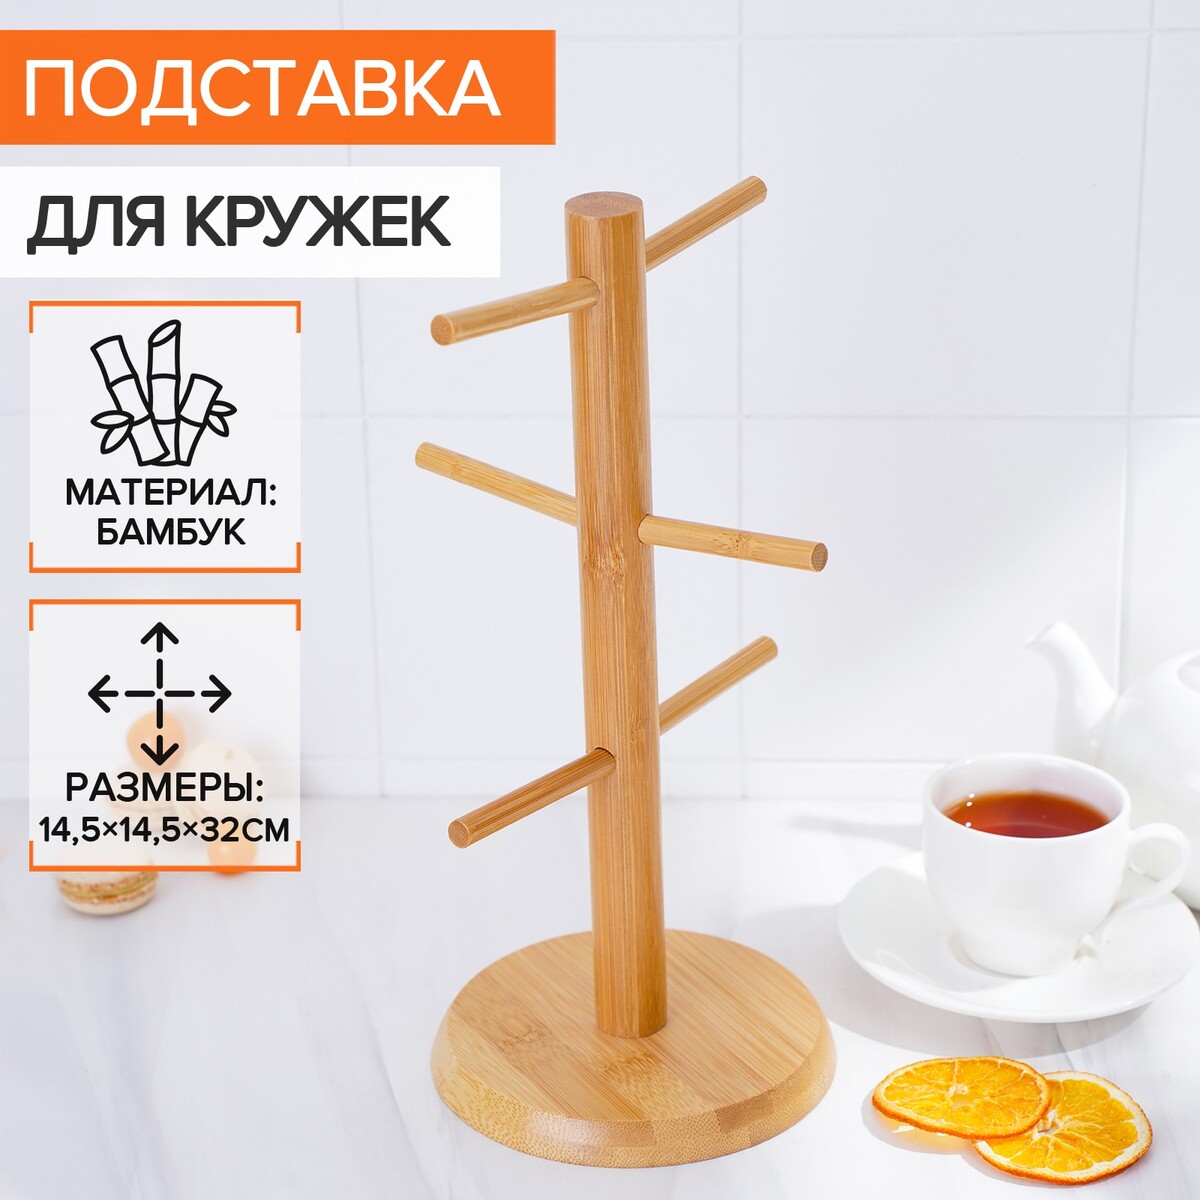 Подставка для кружек bellatenero bamboo, 14,5×32 см, бамбук подставка для ножей zwilling бамбук